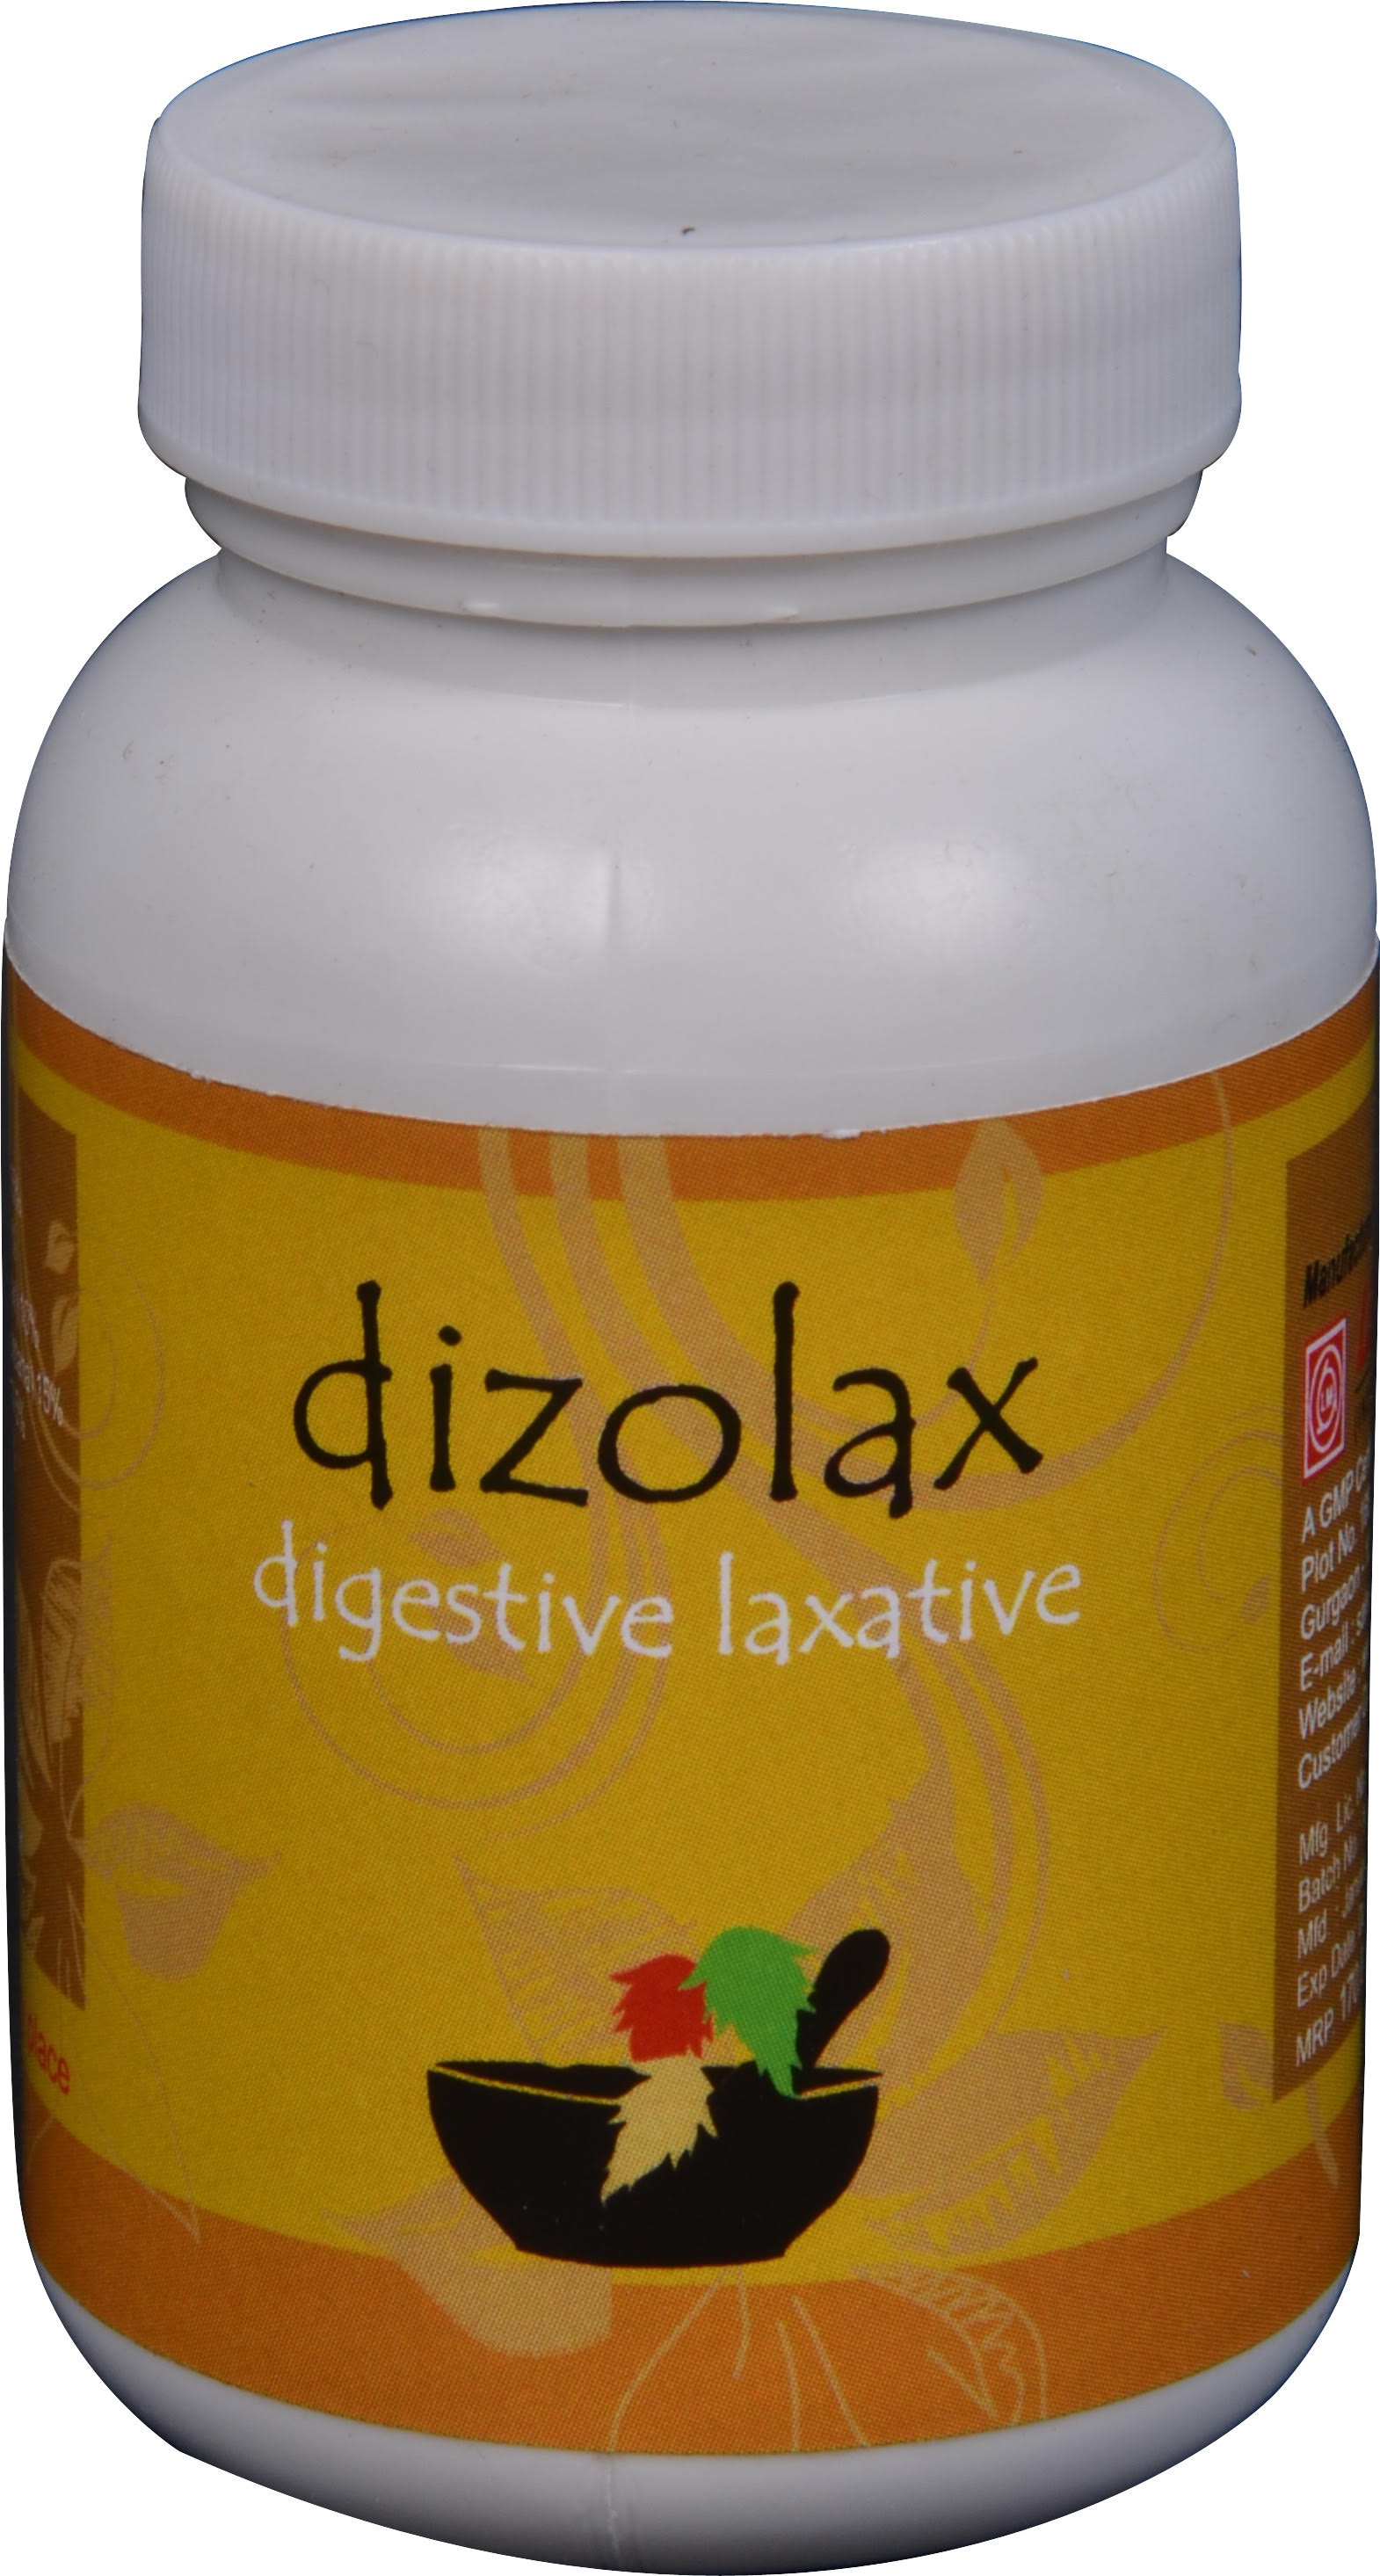 Buy Dizolax Capsules at Best Price Online